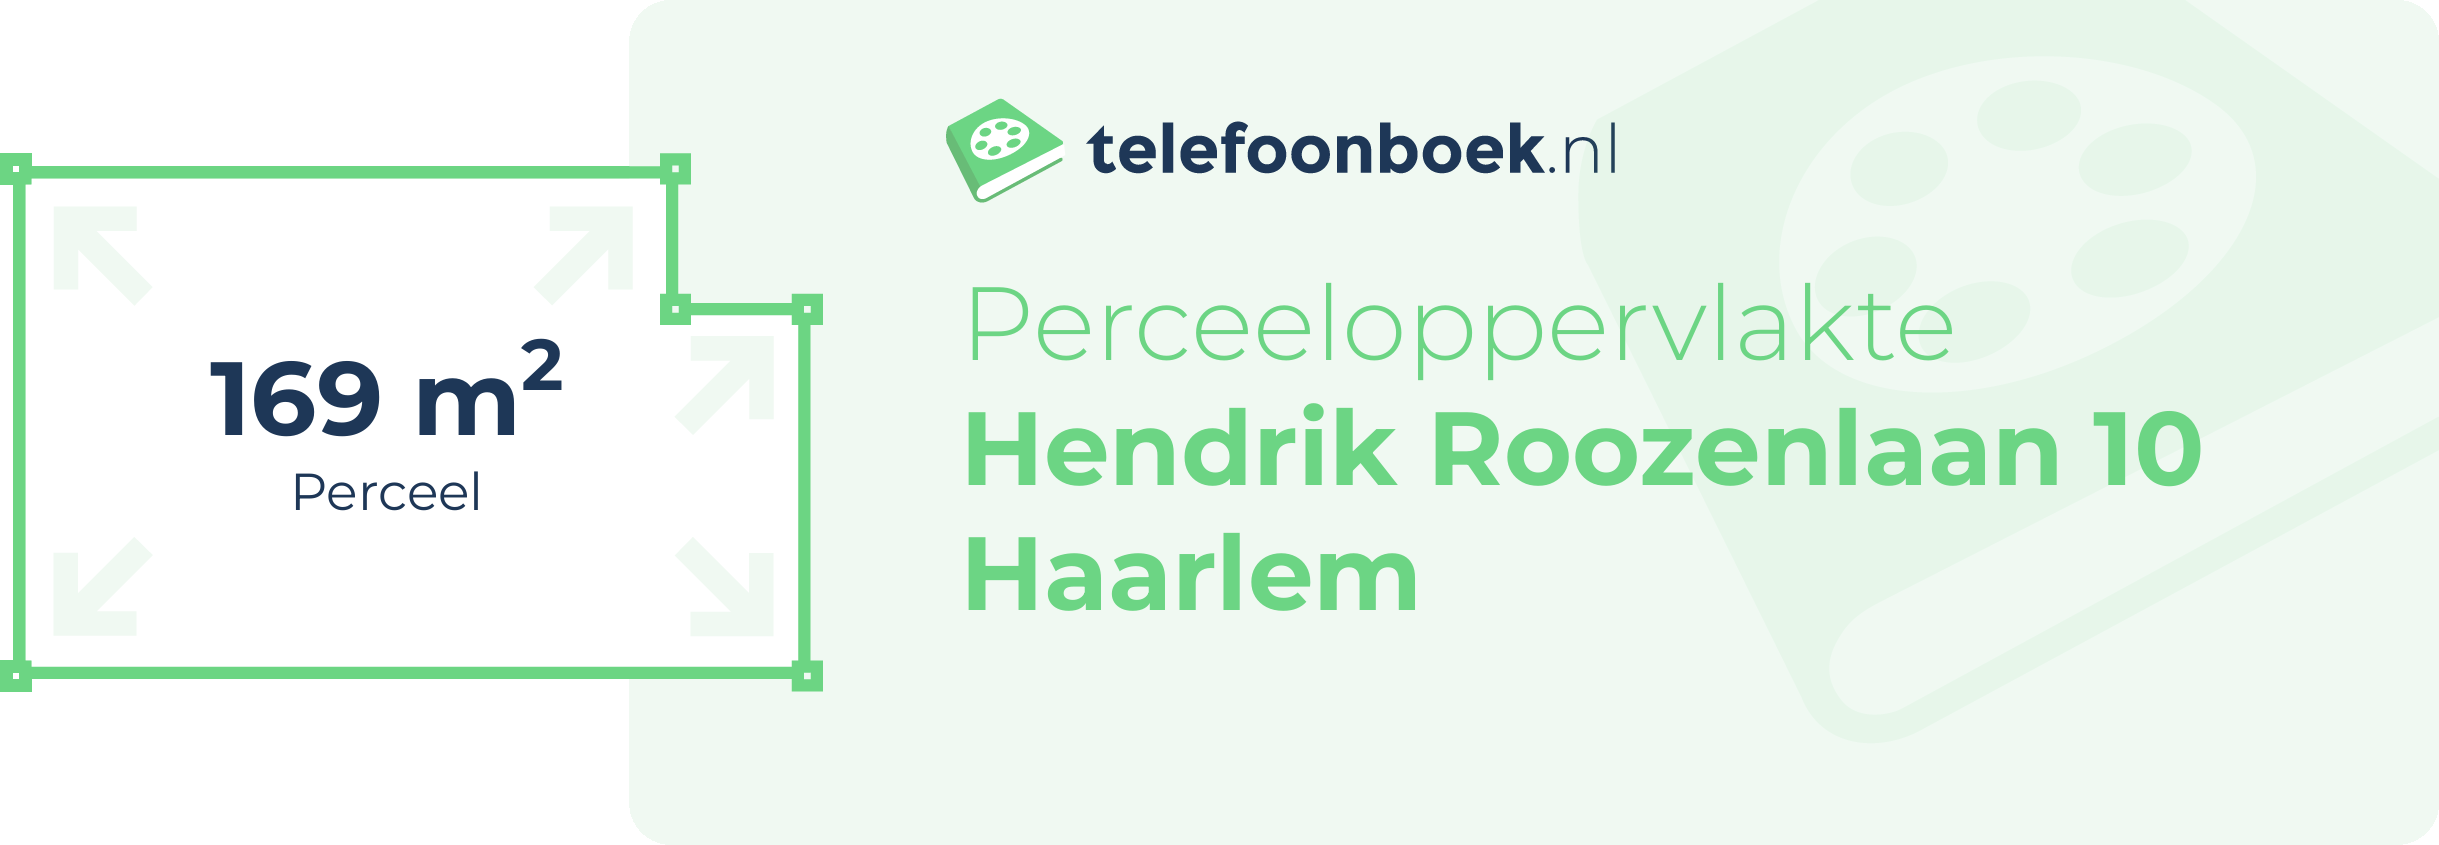 Perceeloppervlakte Hendrik Roozenlaan 10 Haarlem